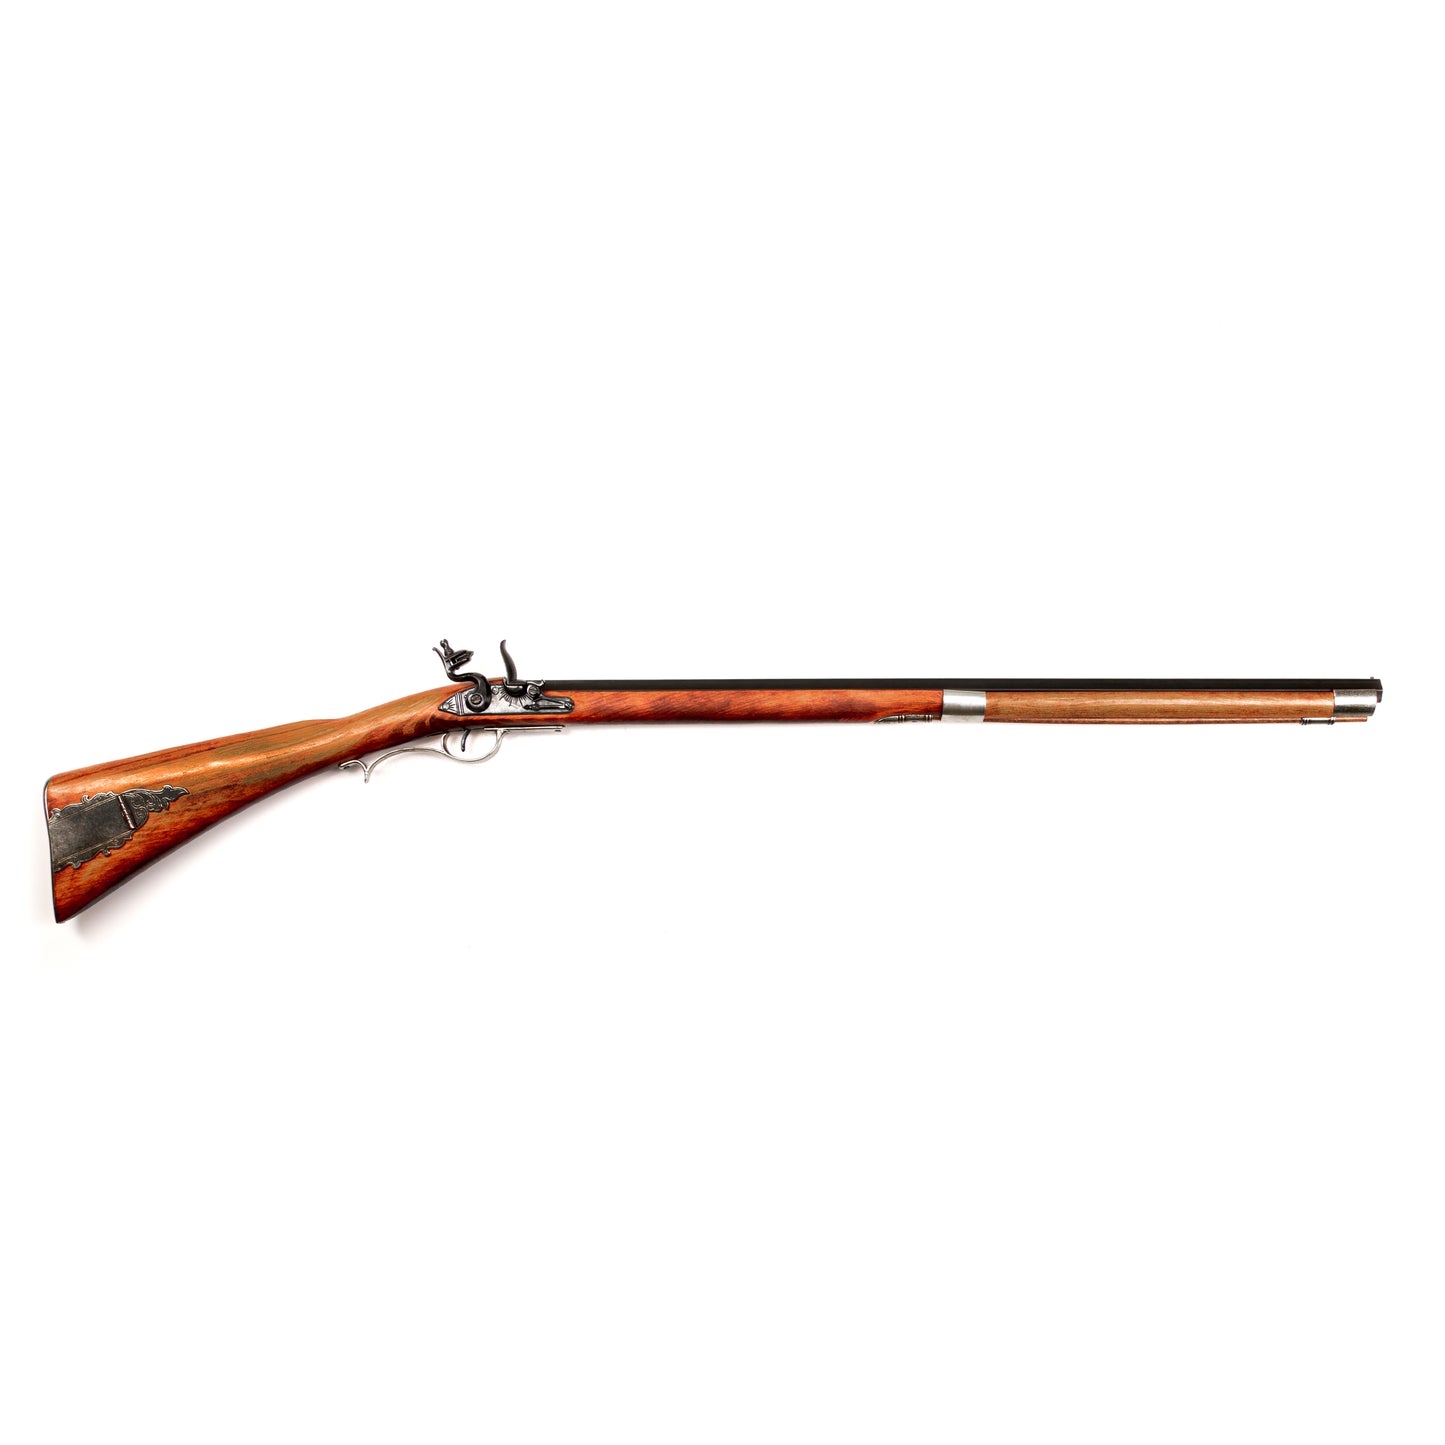 Denix Kentucky Replica Rifle - Short Version